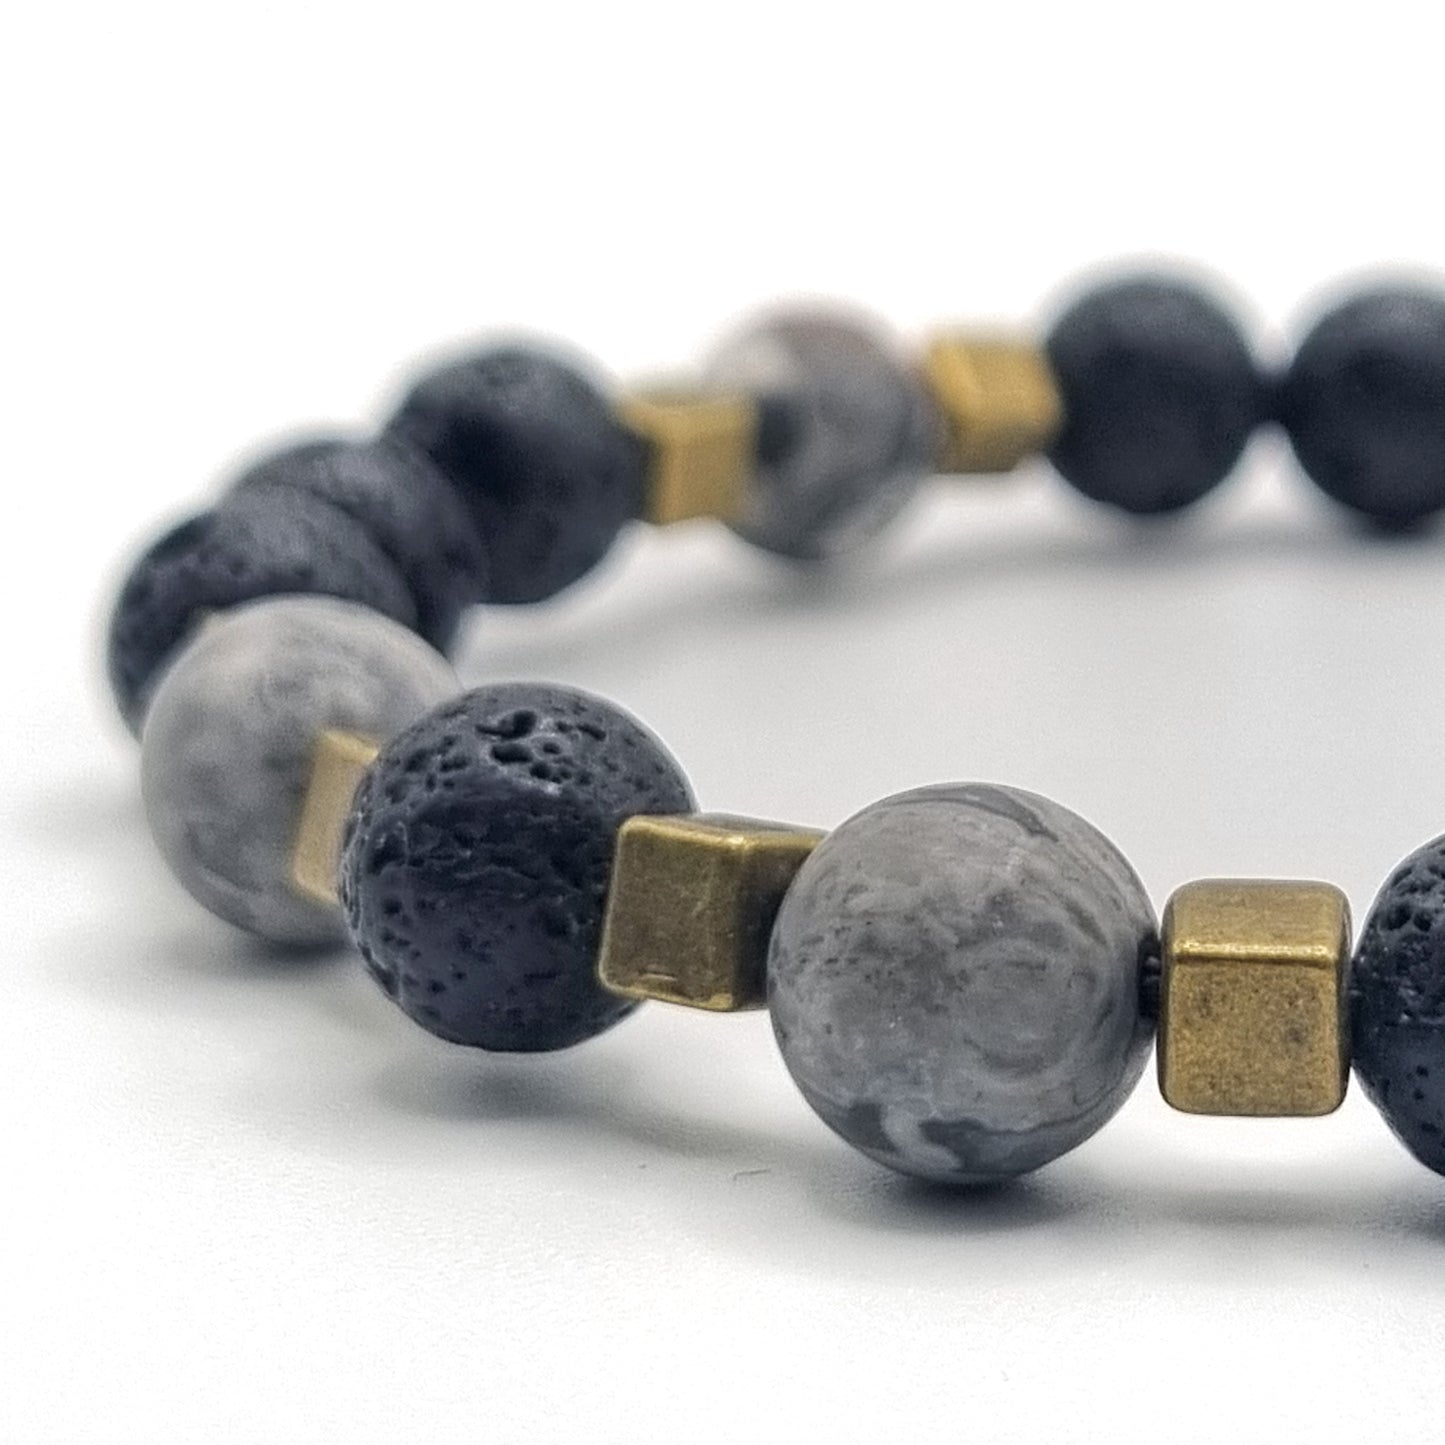 Bracelet with Jasper and Lavastone beads | ,,Full Moon"